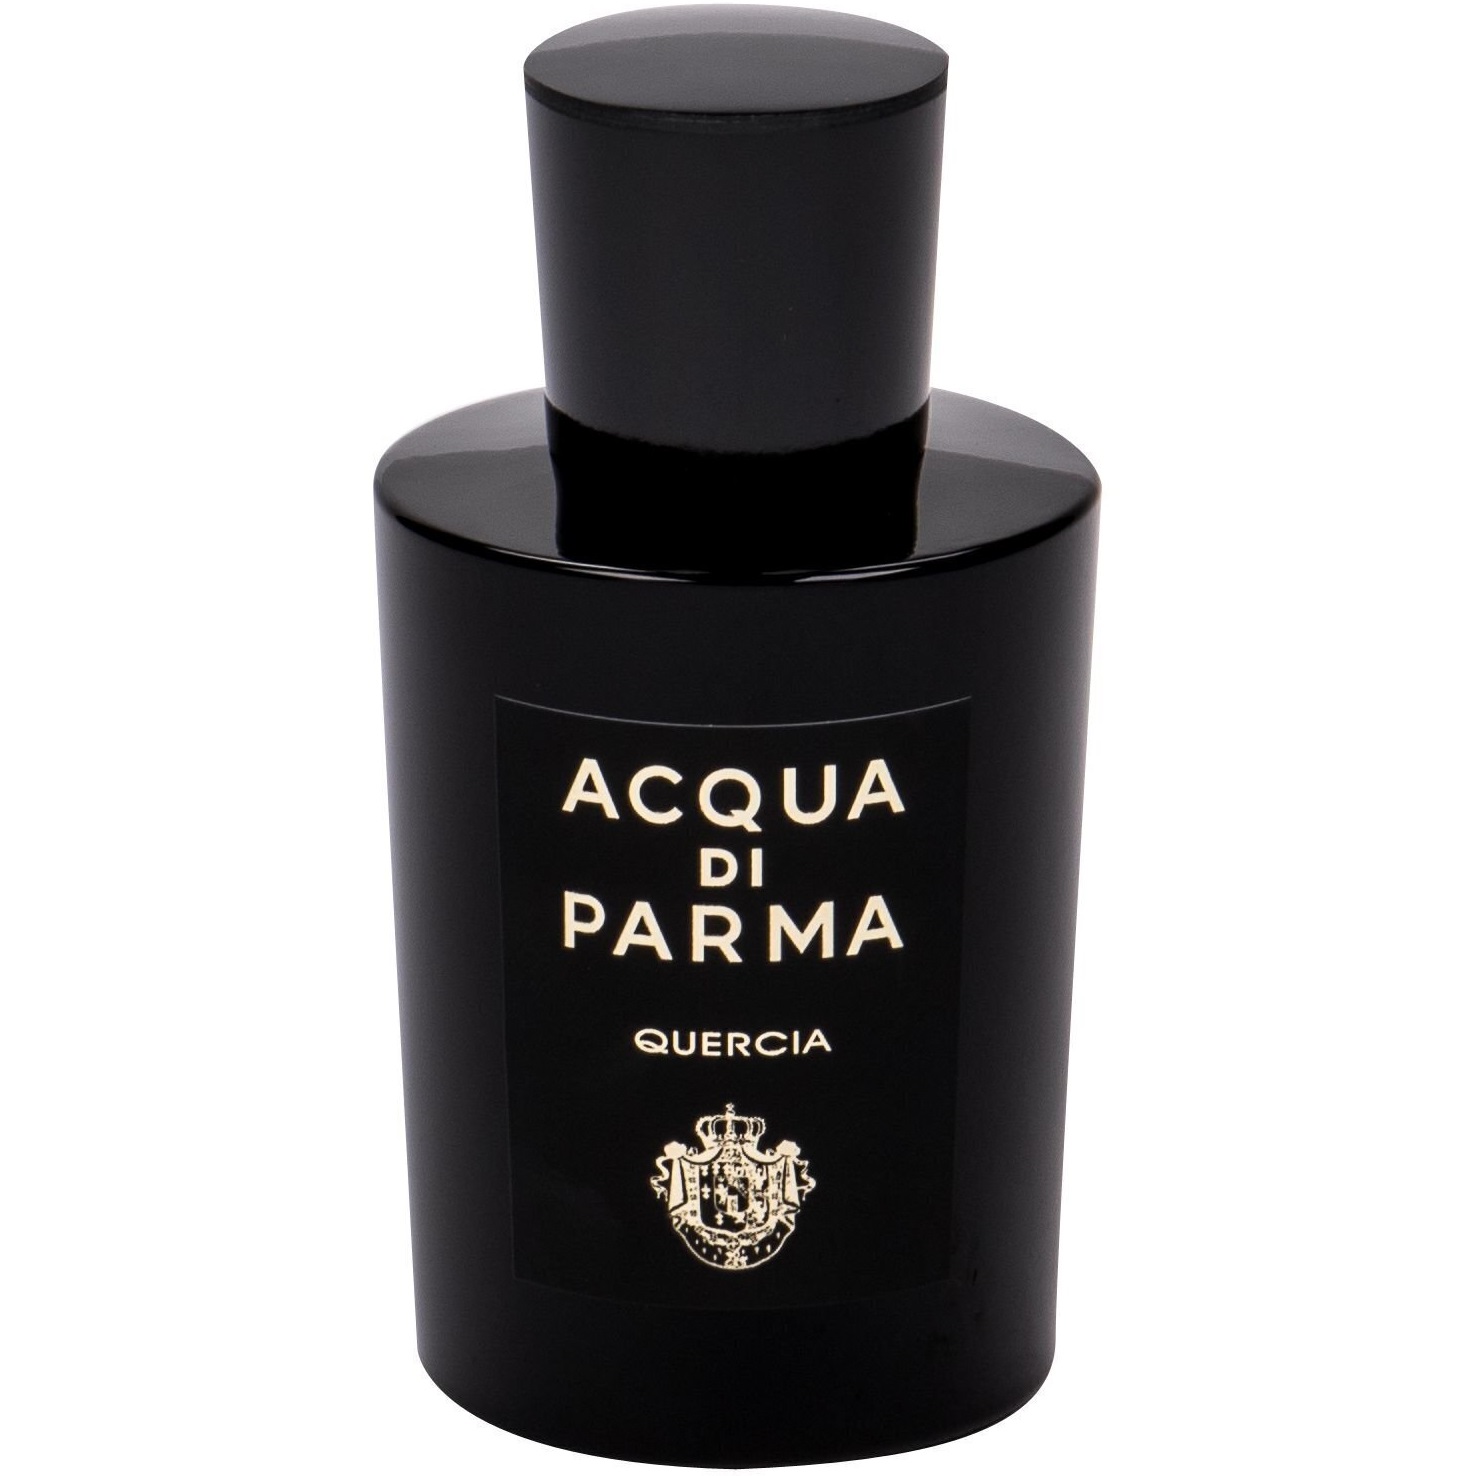 Acqua di Parma - Quercia Eau de Parfum (1мл)